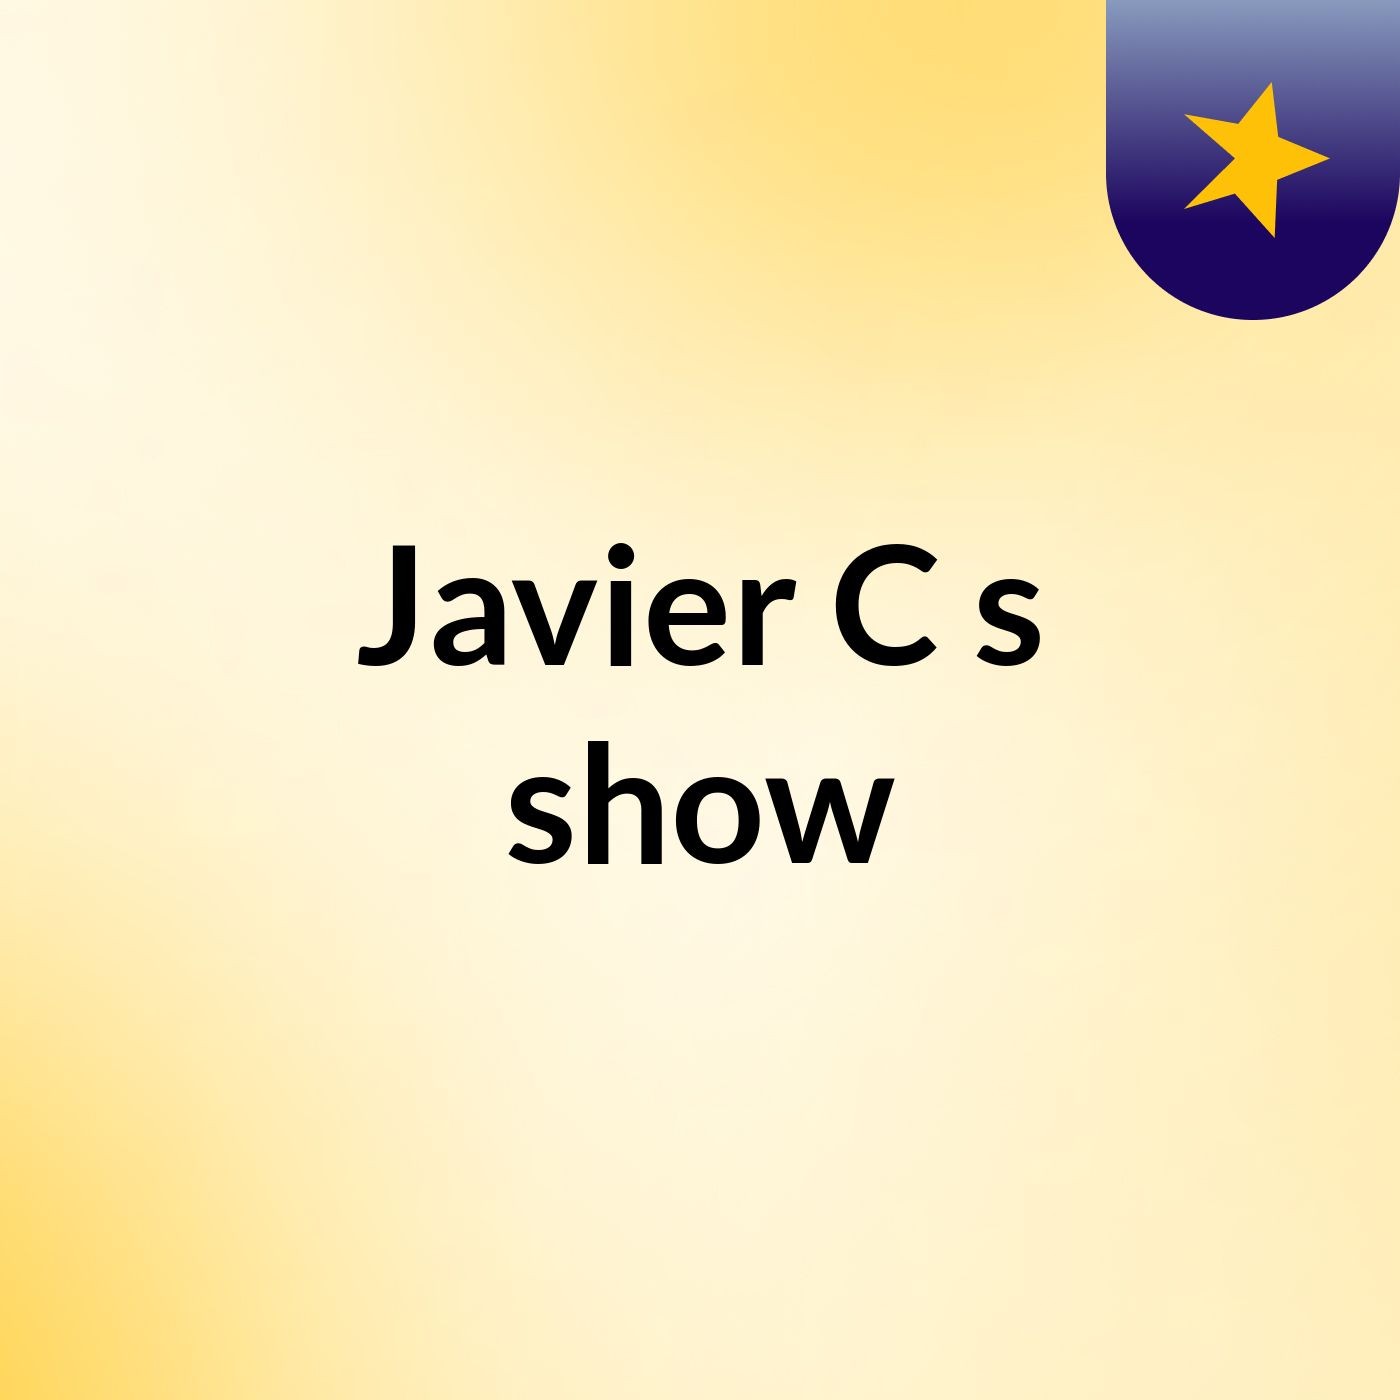 Javier C's show